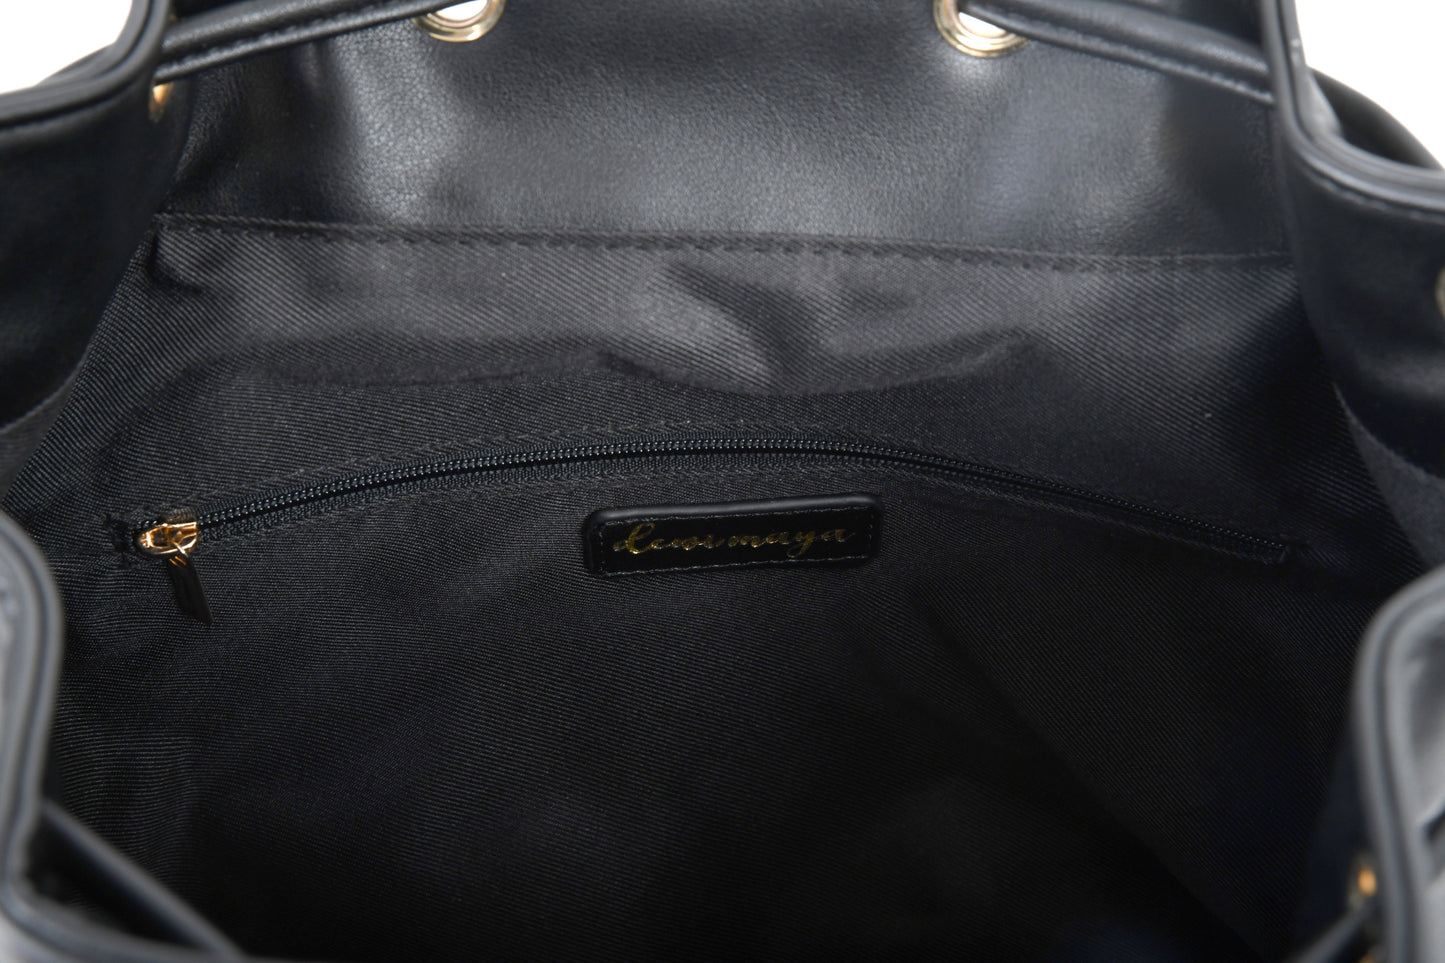 Darti Black Handbag made by Dewi Maya black interior with zipper pocket